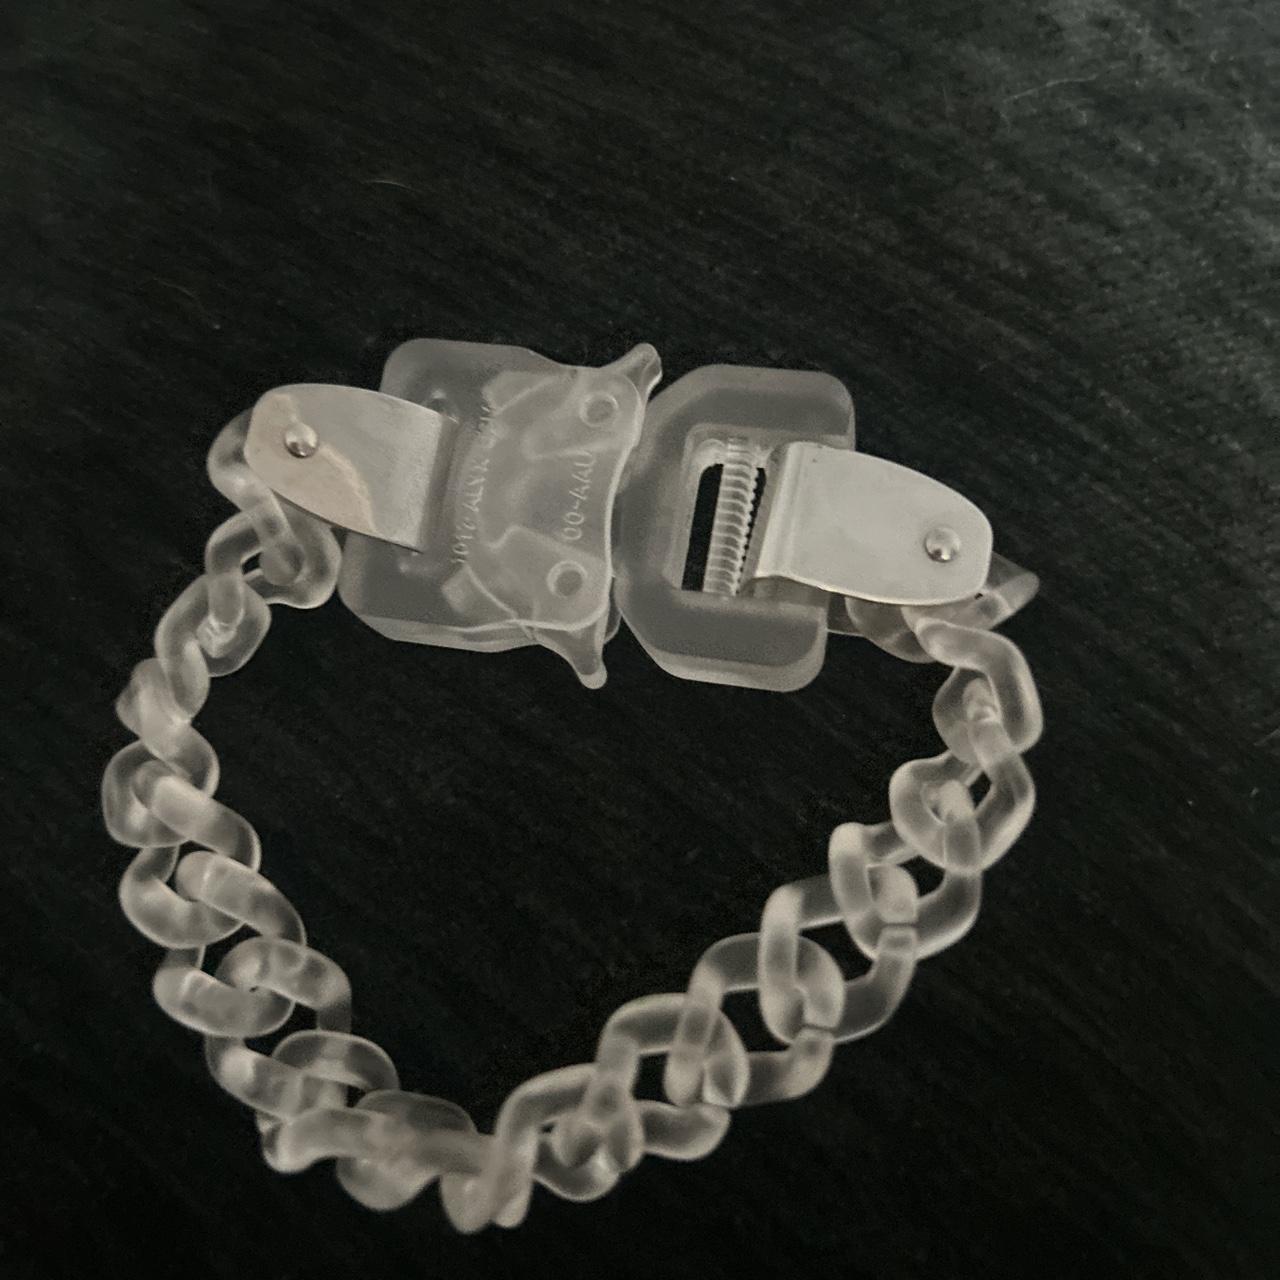 alyx clear bracelet used but excellent condition - Depop